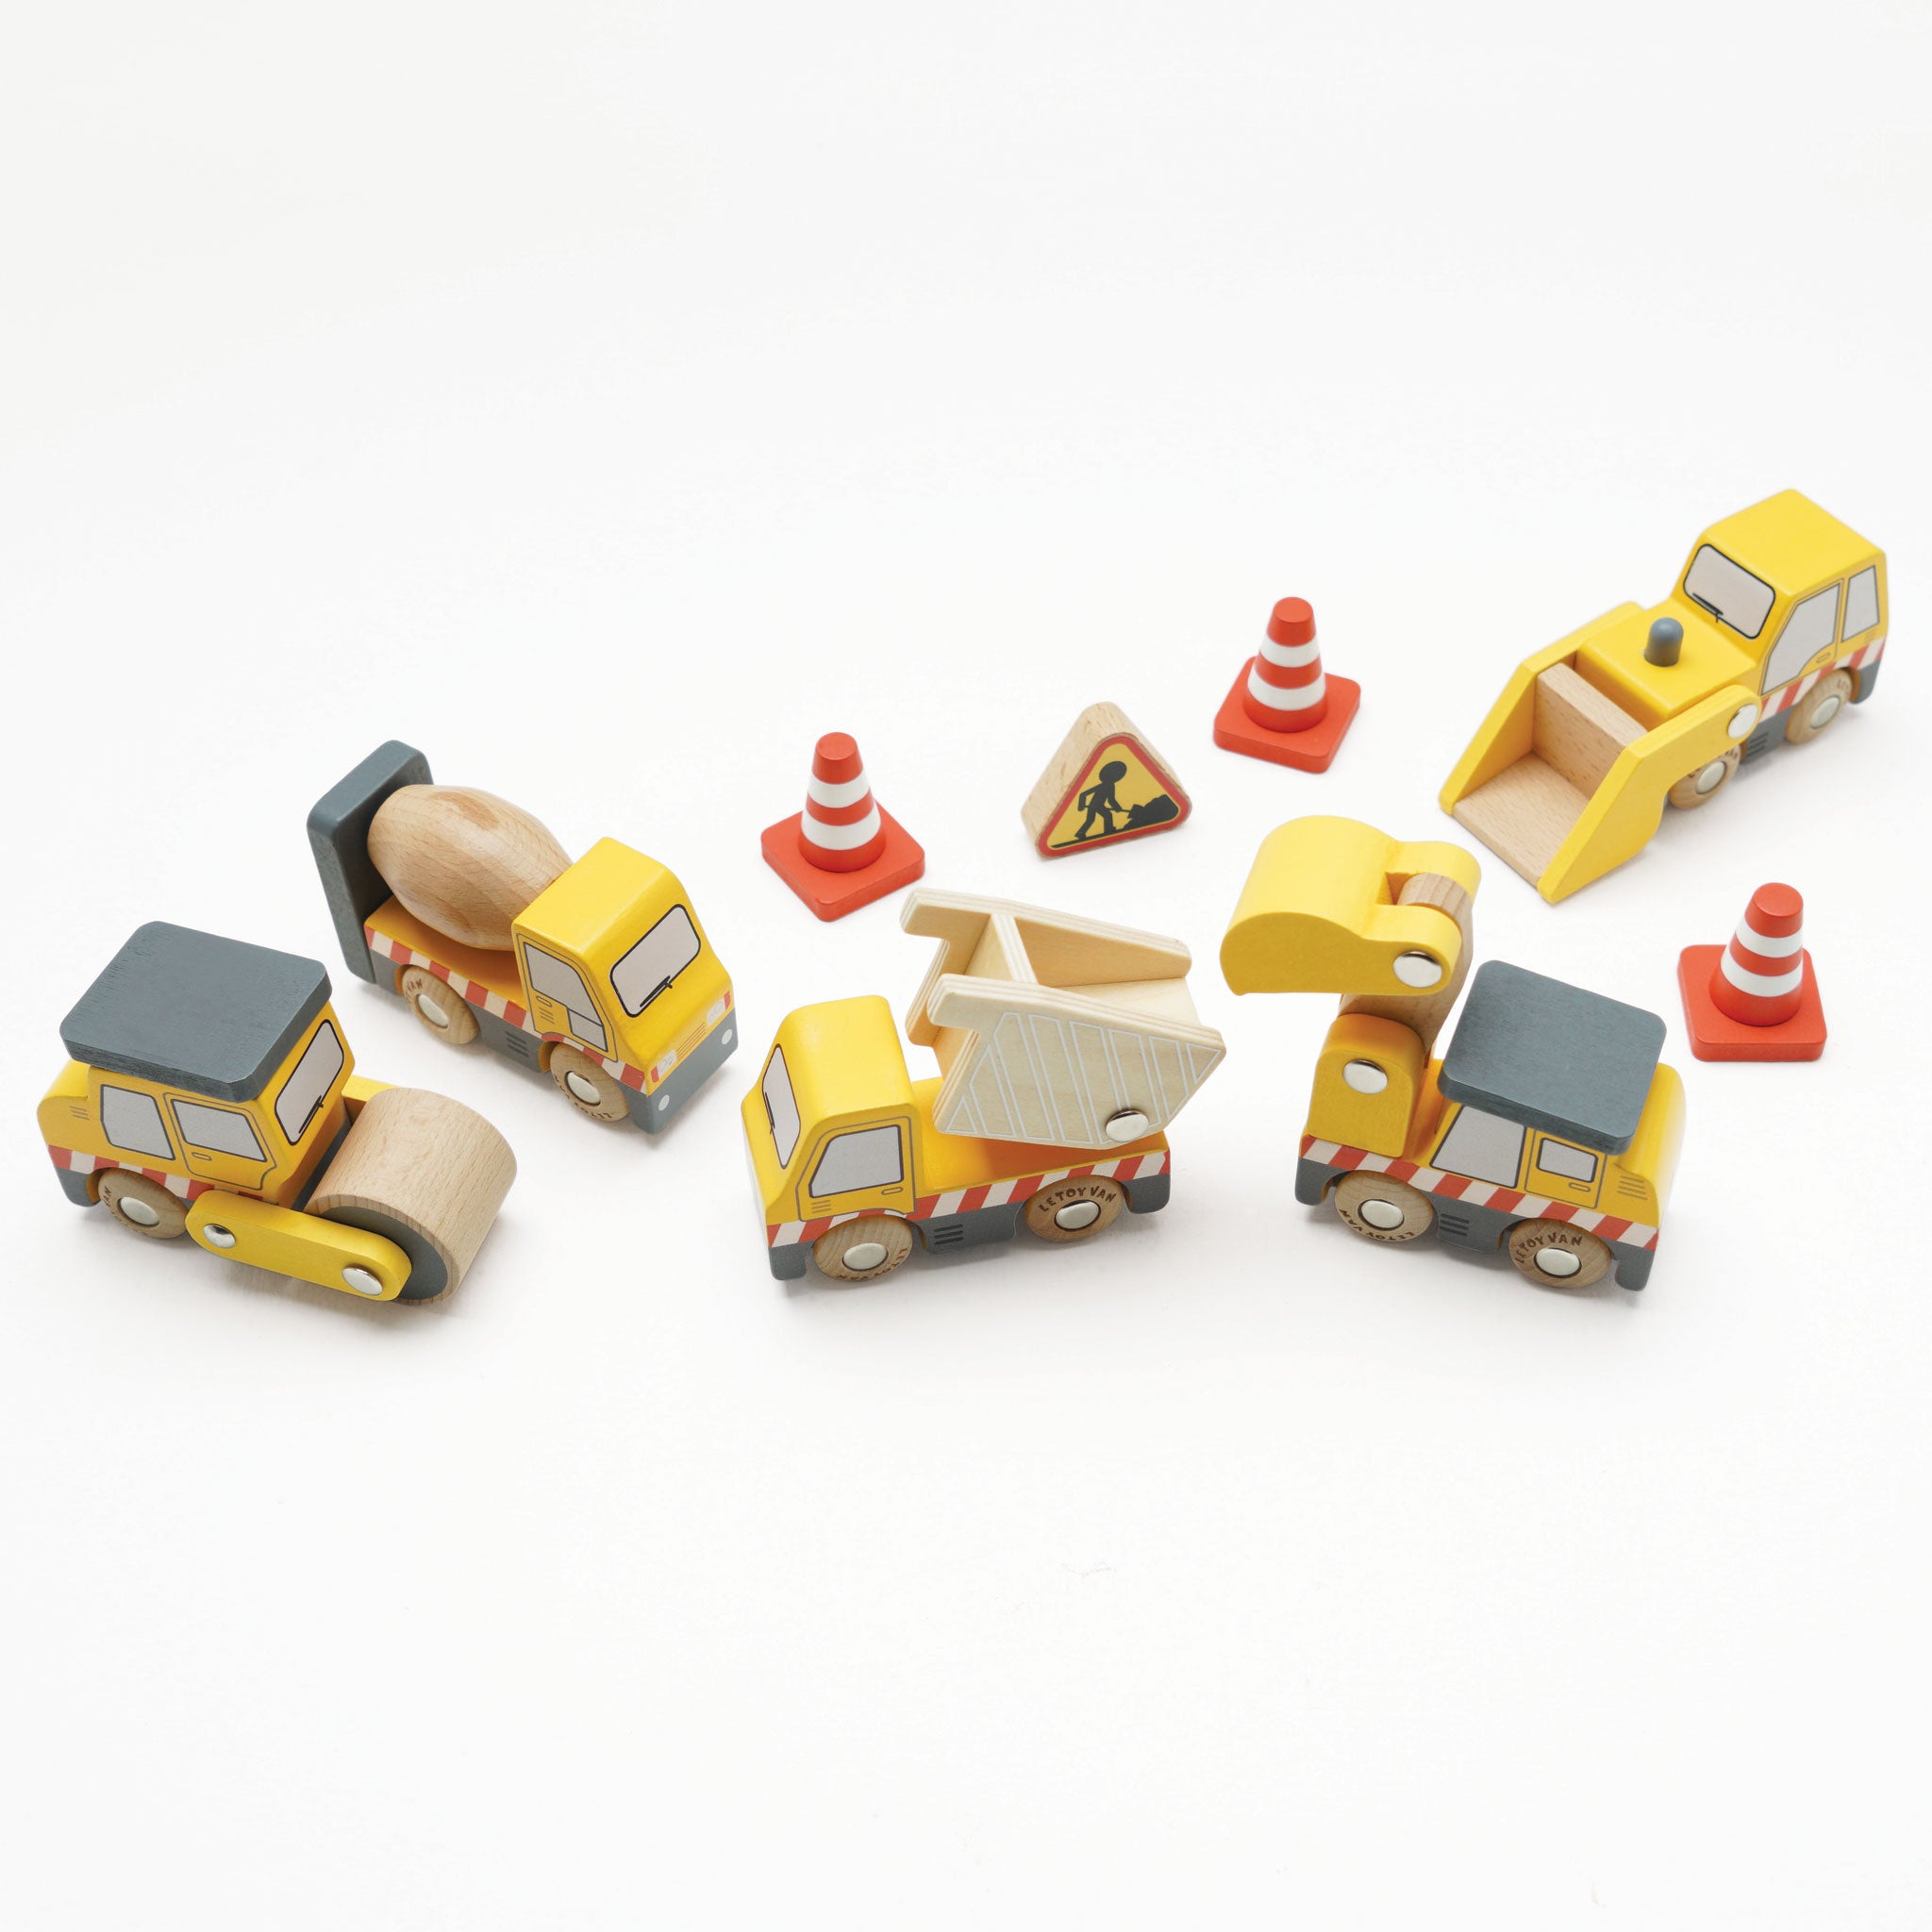 Le Toy Van Wooden Construction Toys Set